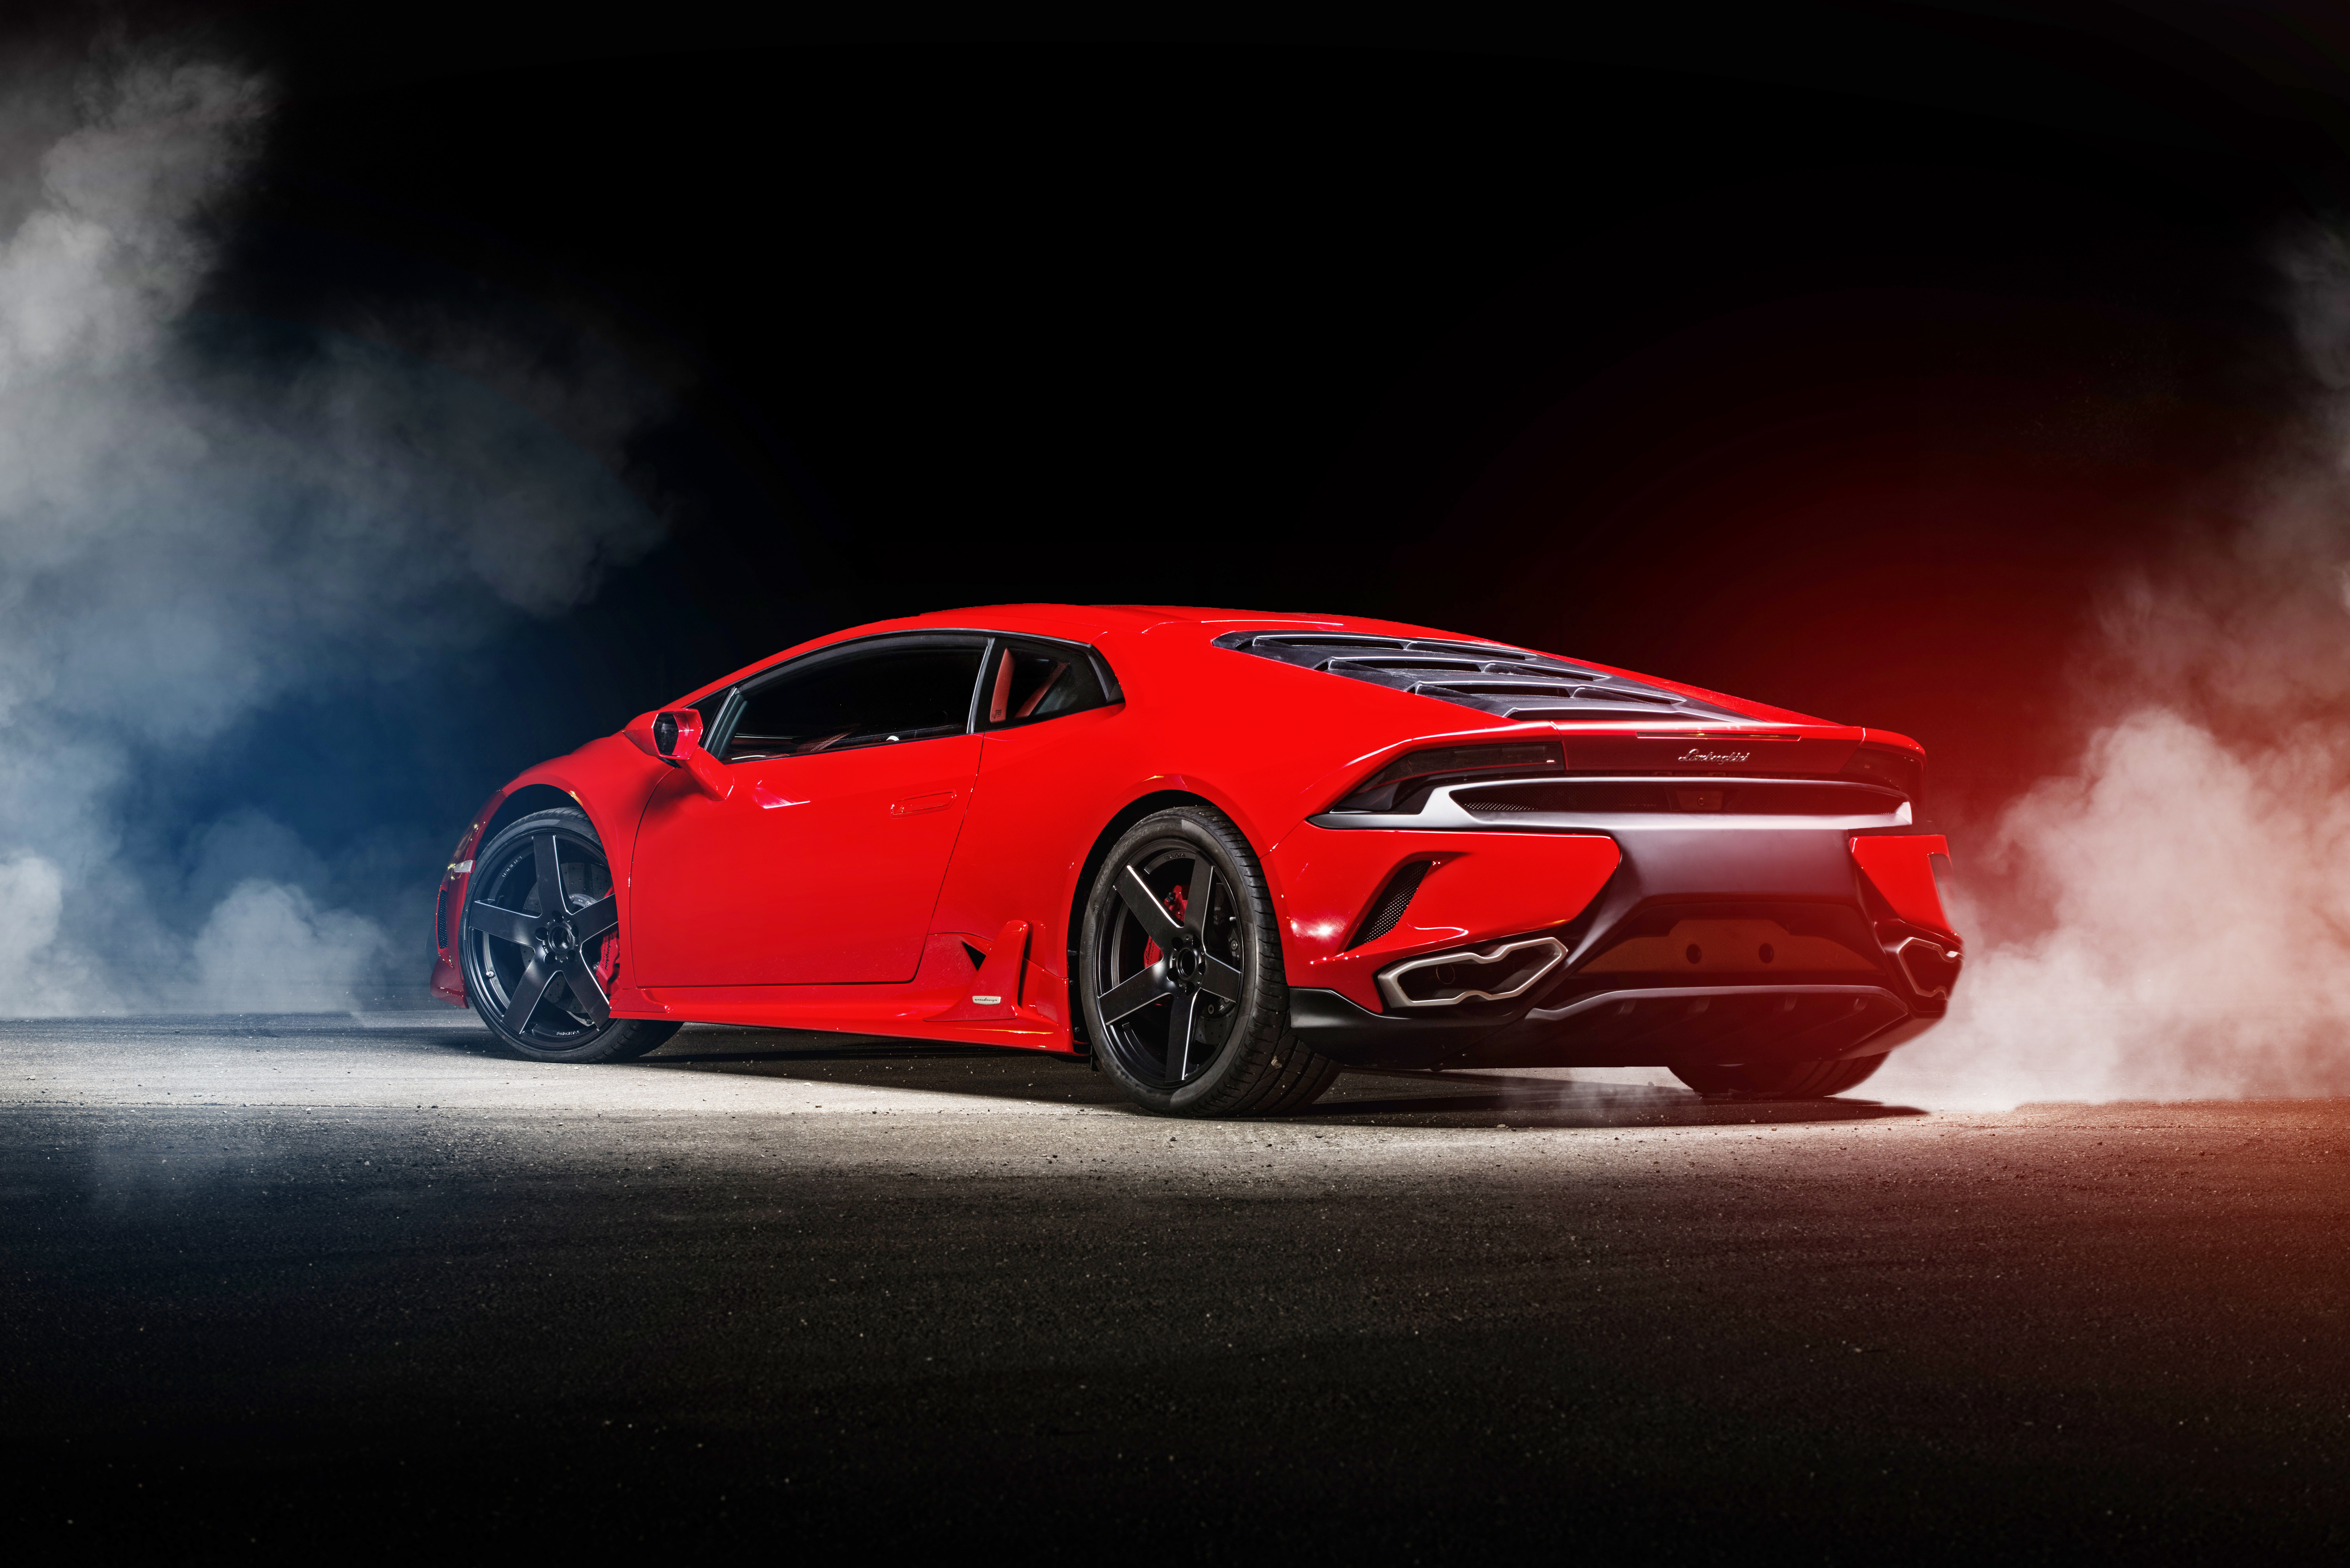 Lamborghini Huracan Wallpapers Images Photos Pictures ...